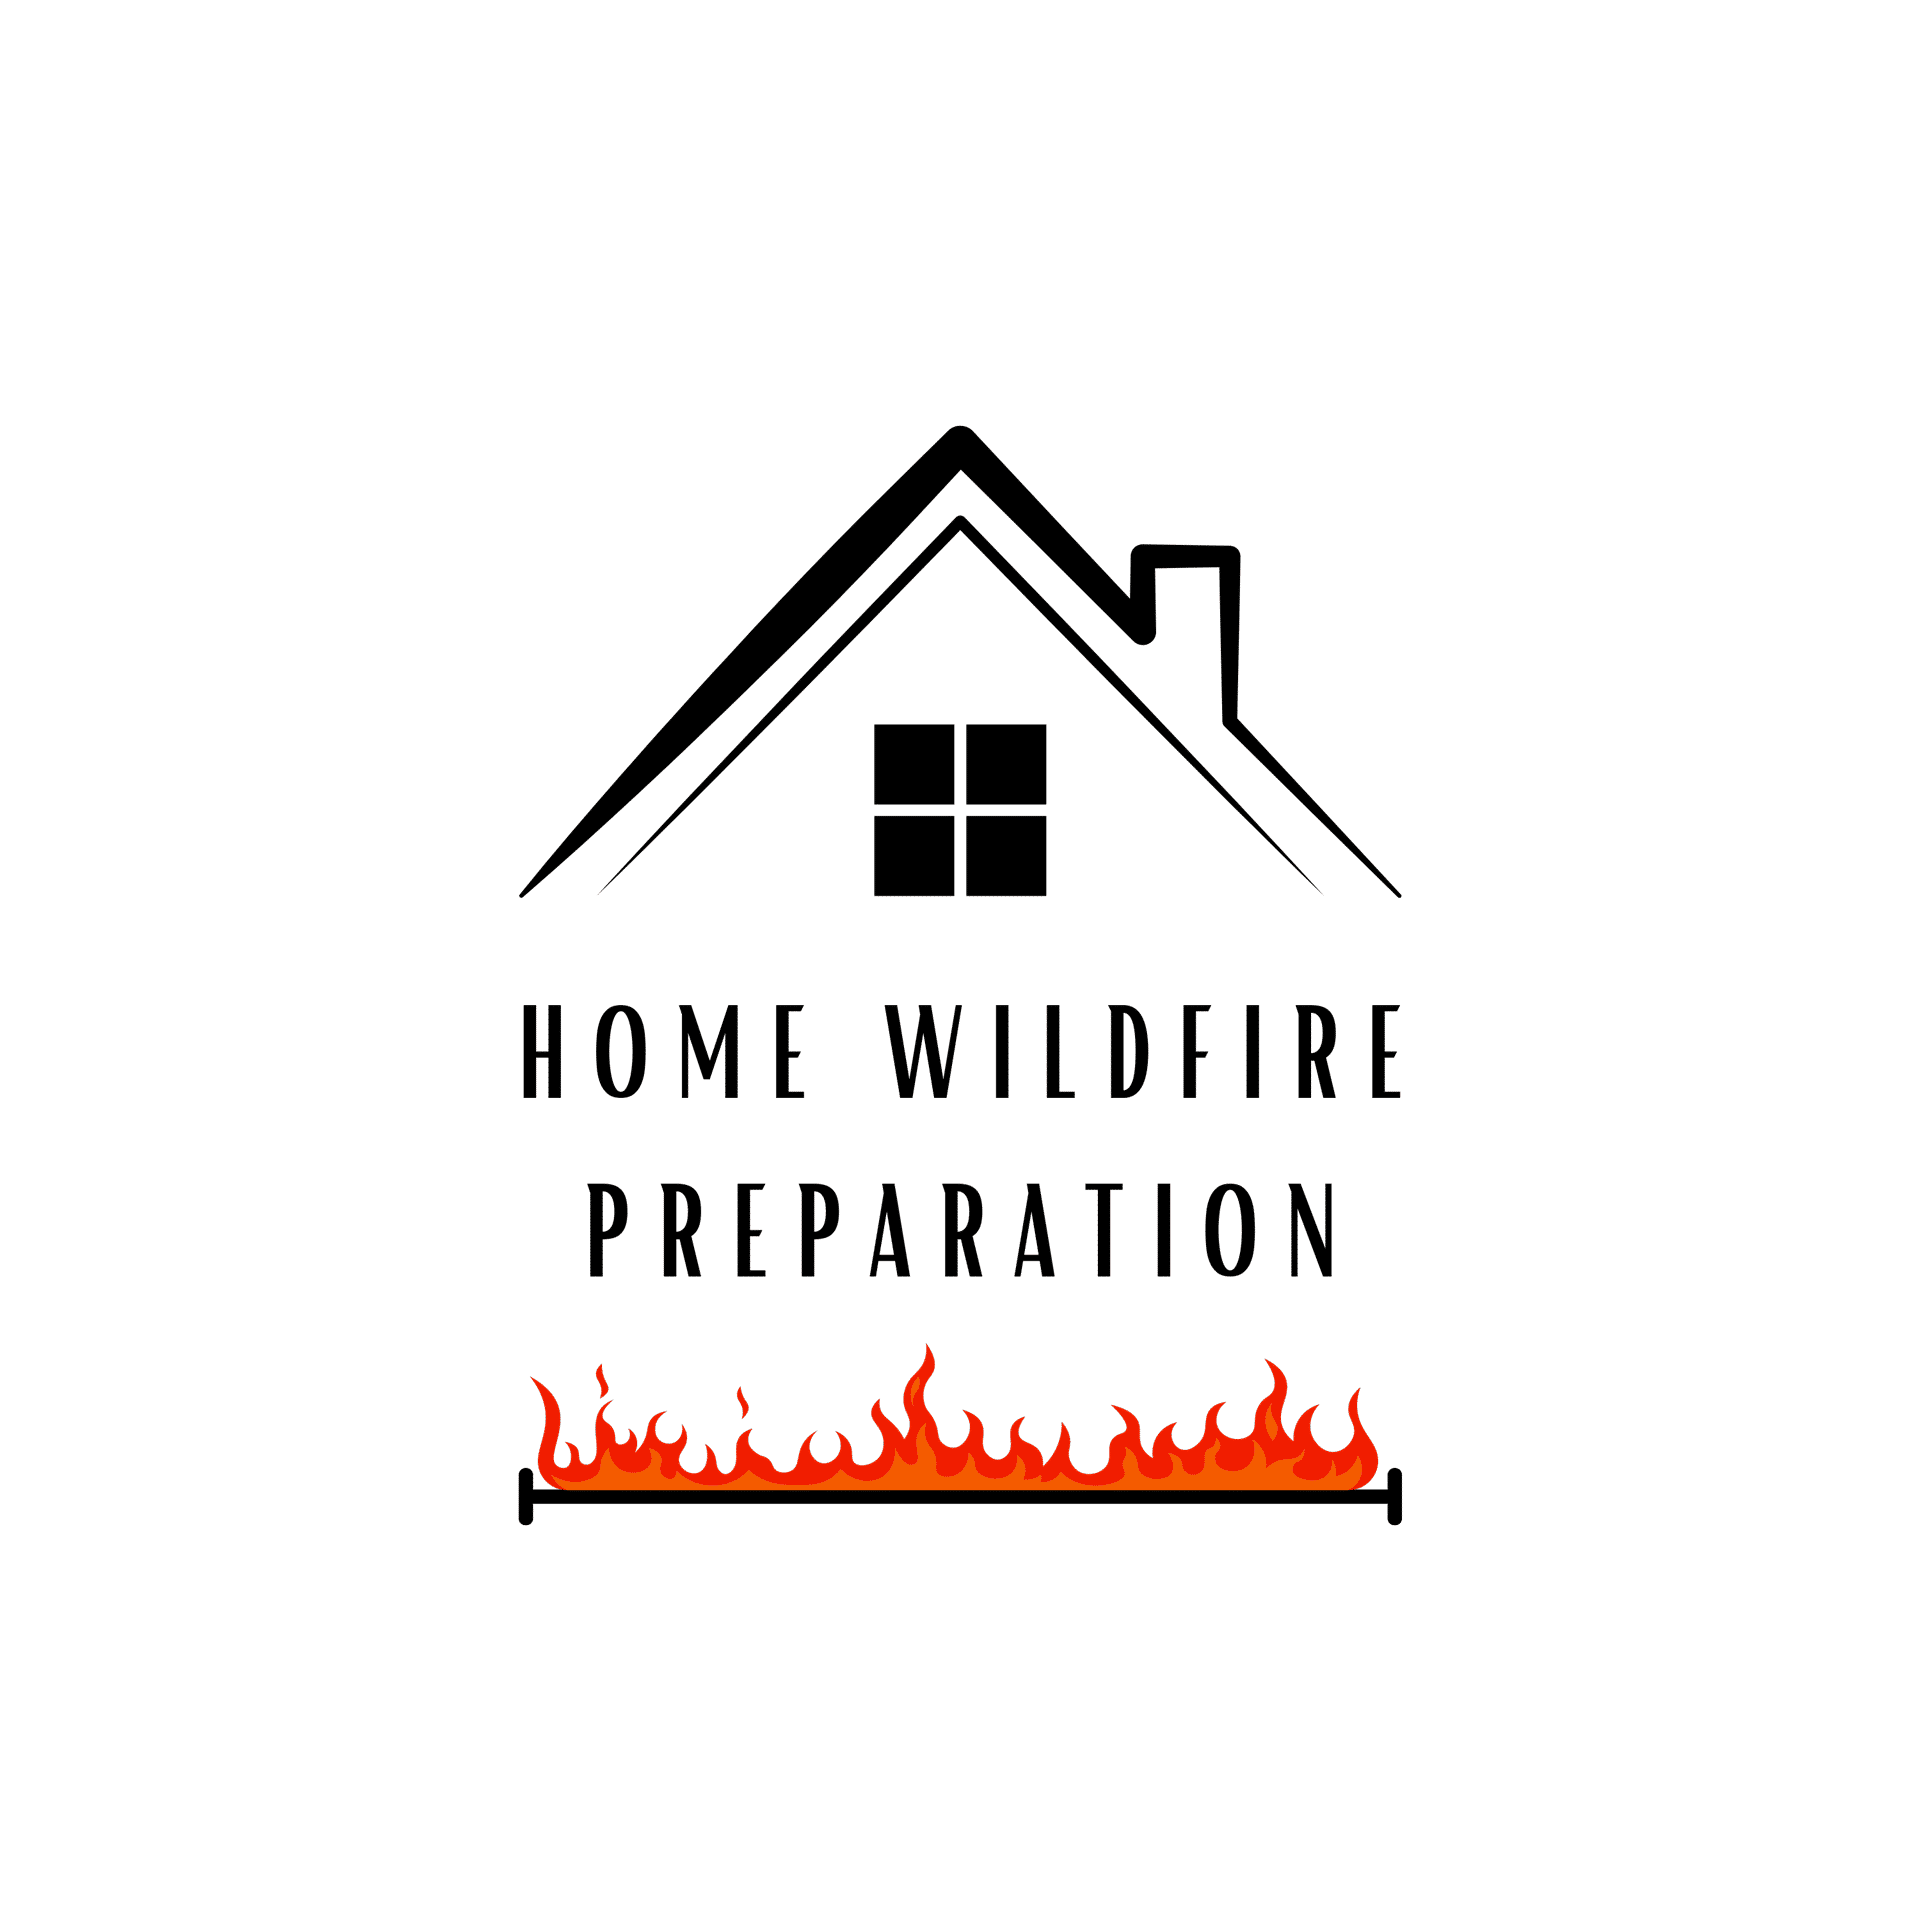 Home Wildfire Preparation logo